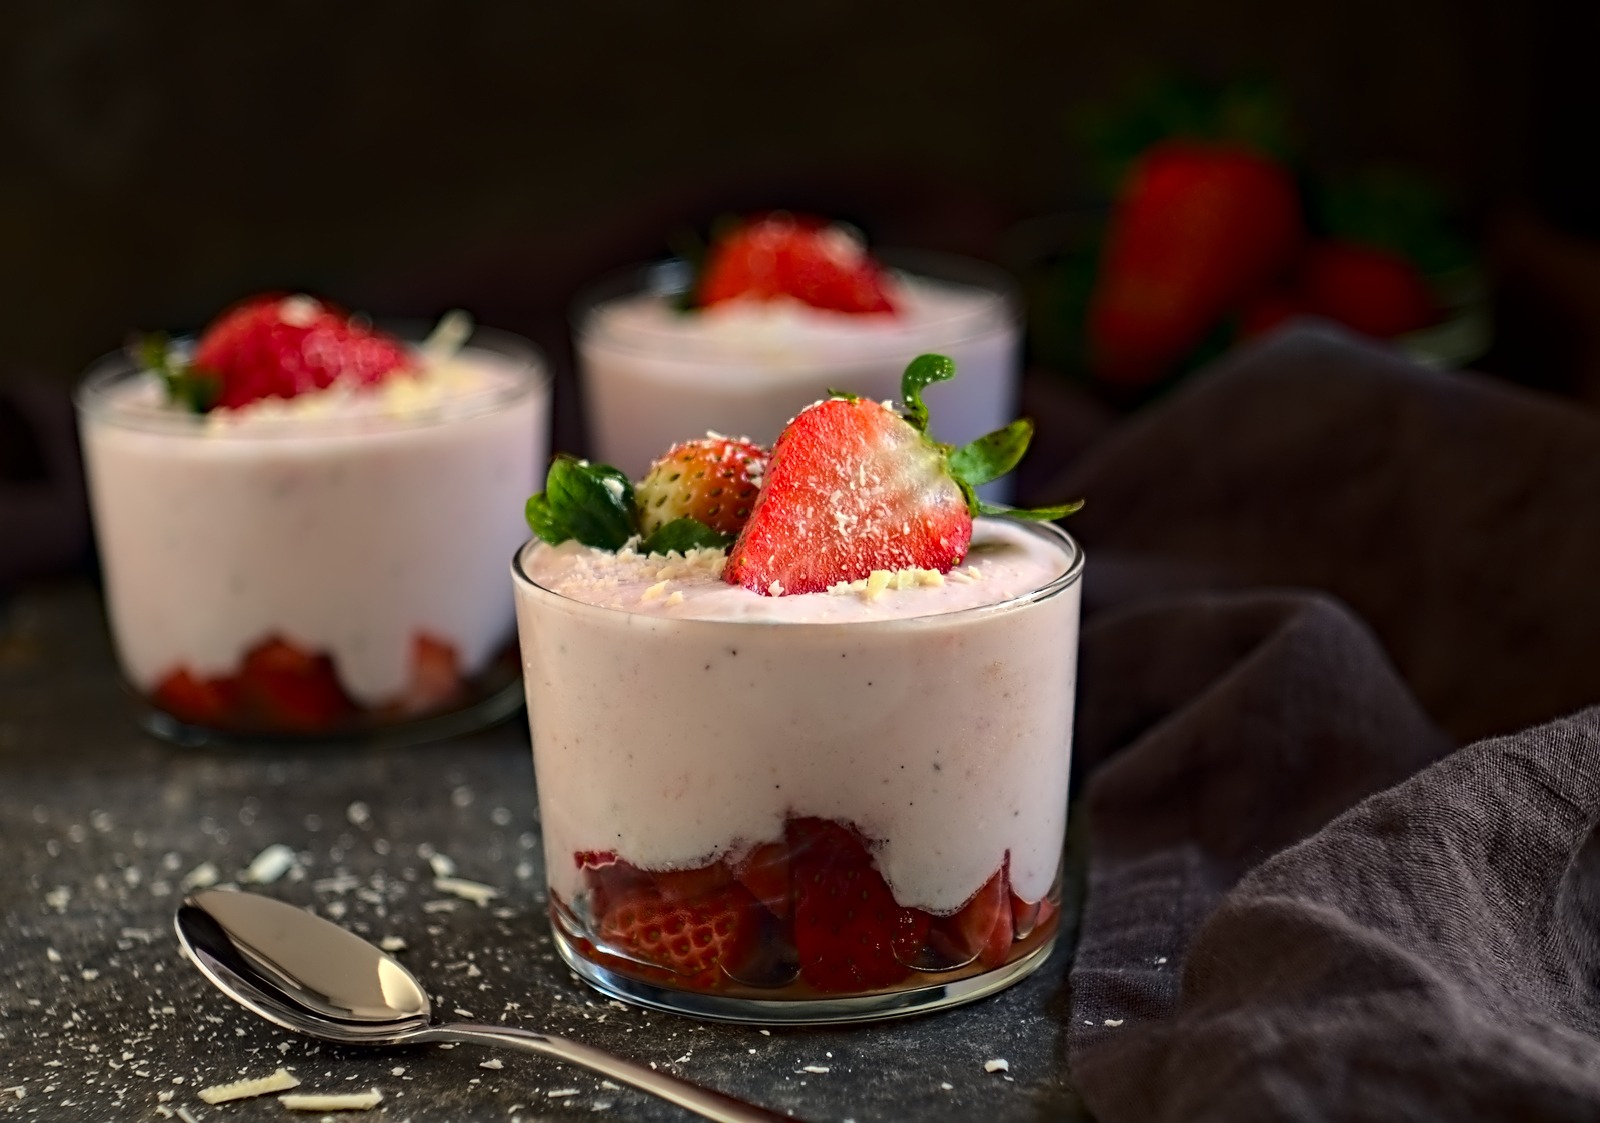 cremiger Erdbeer-Quark – leichtes Dessert im Glas! - Preppie and me